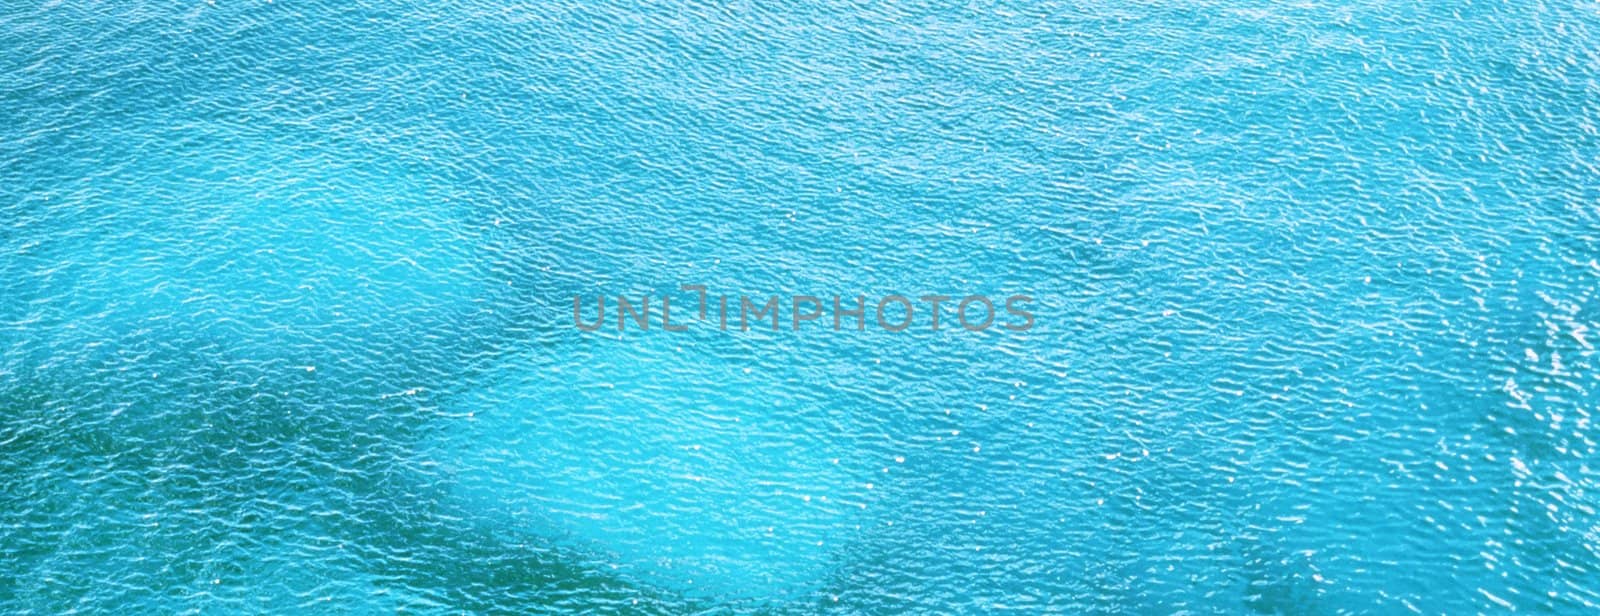 blue water surface by ozaiachin